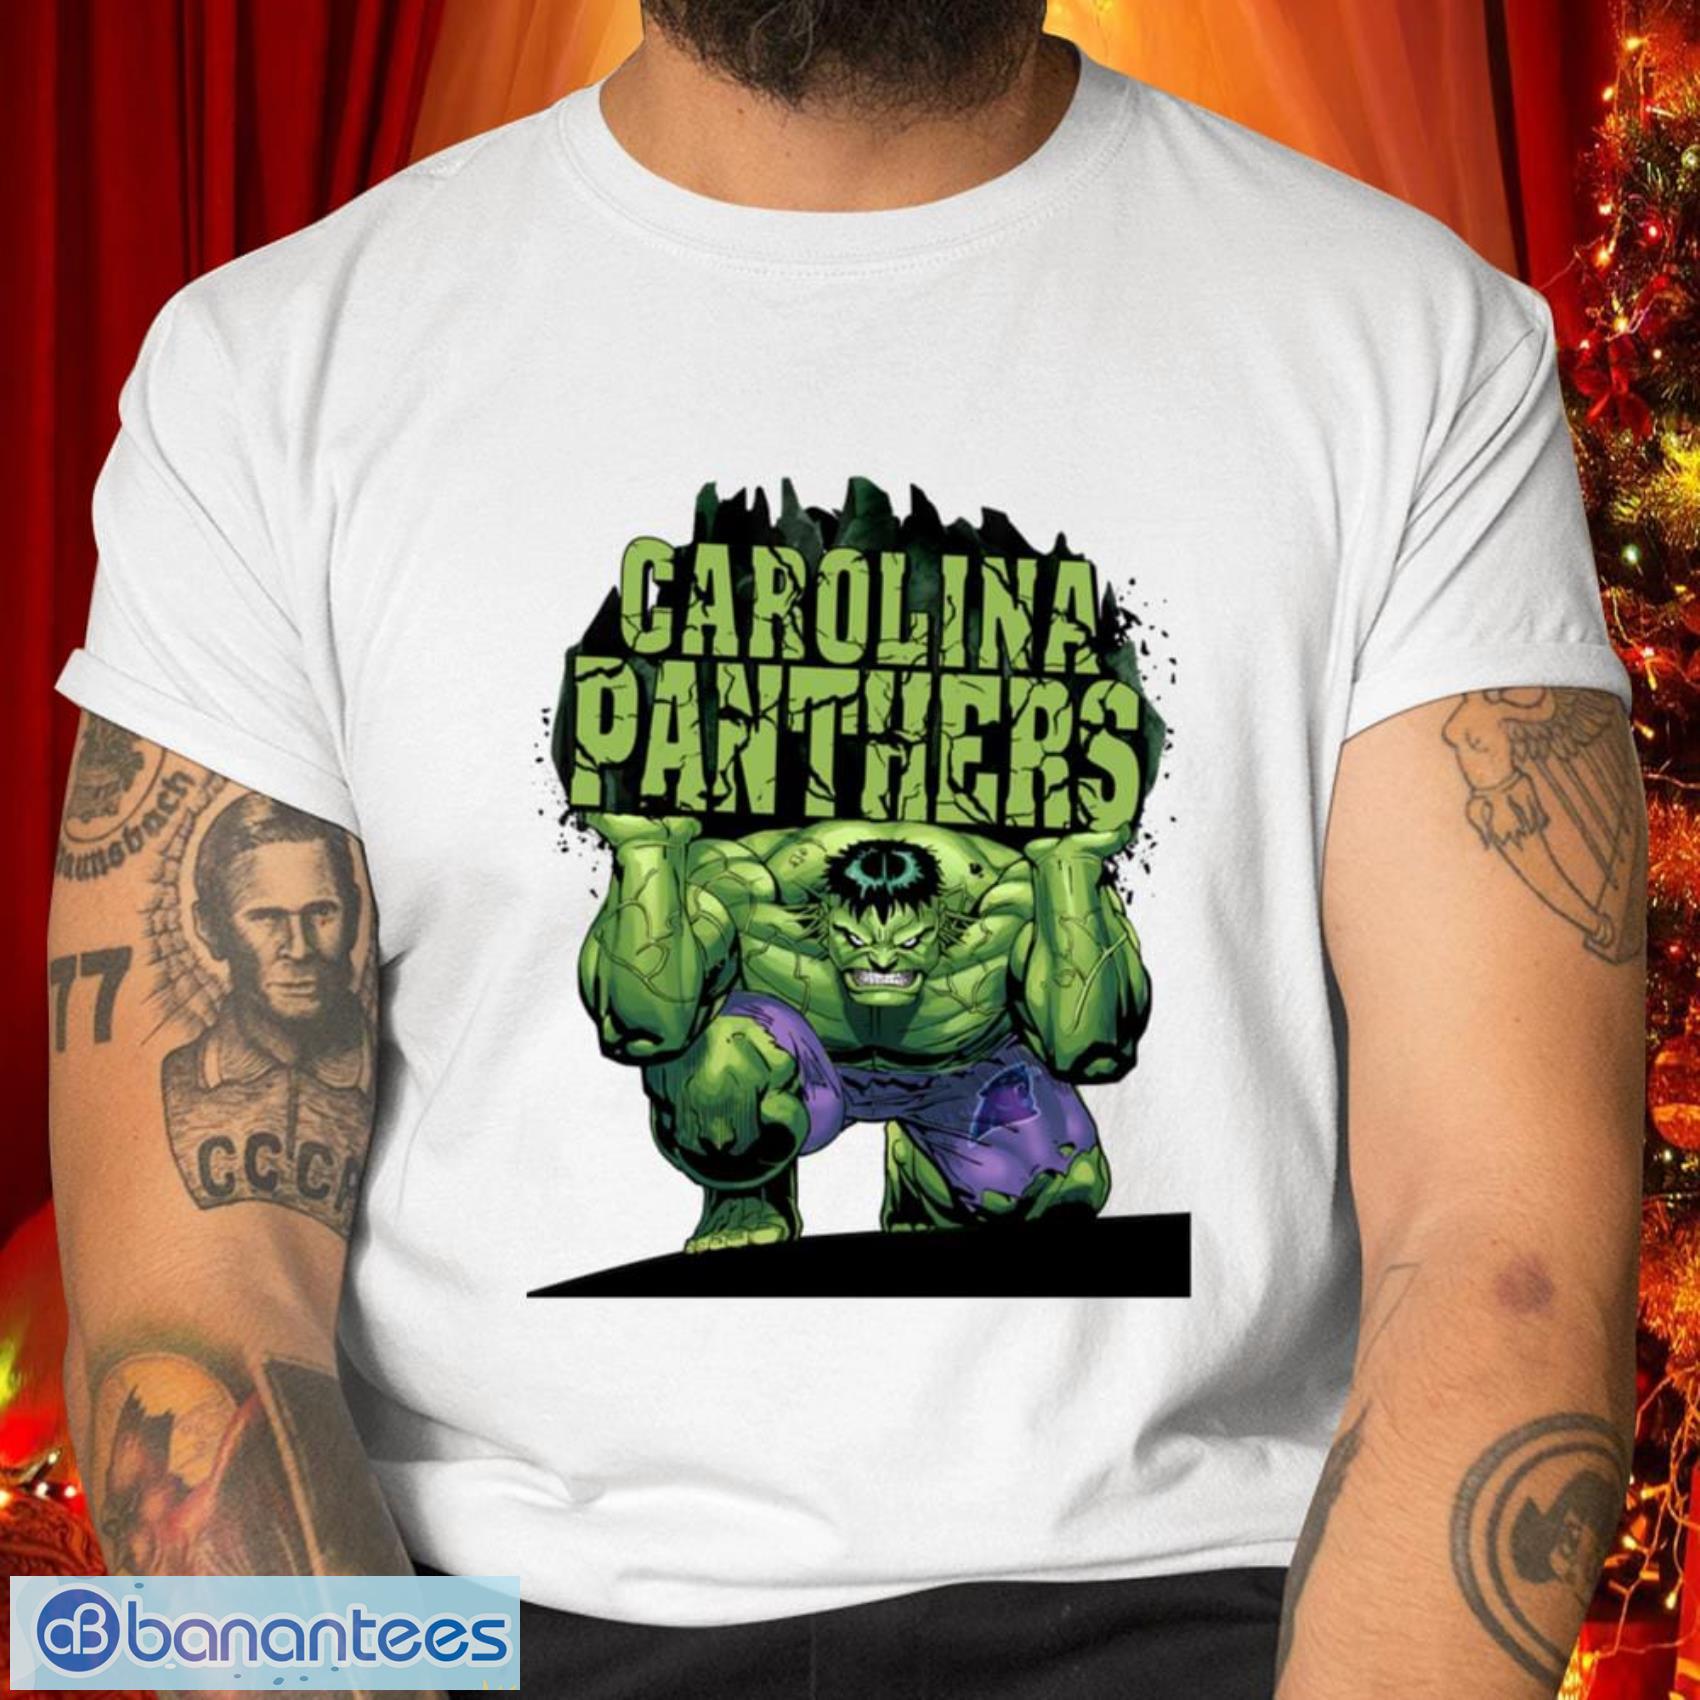 Carolina Panthers NFL Football Gift Fr Fans Incredible Hulk Marvel Avengers Sports T Shirt - Carolina Panthers NFL Football Incredible Hulk Marvel Avengers Sports T Shirt_1